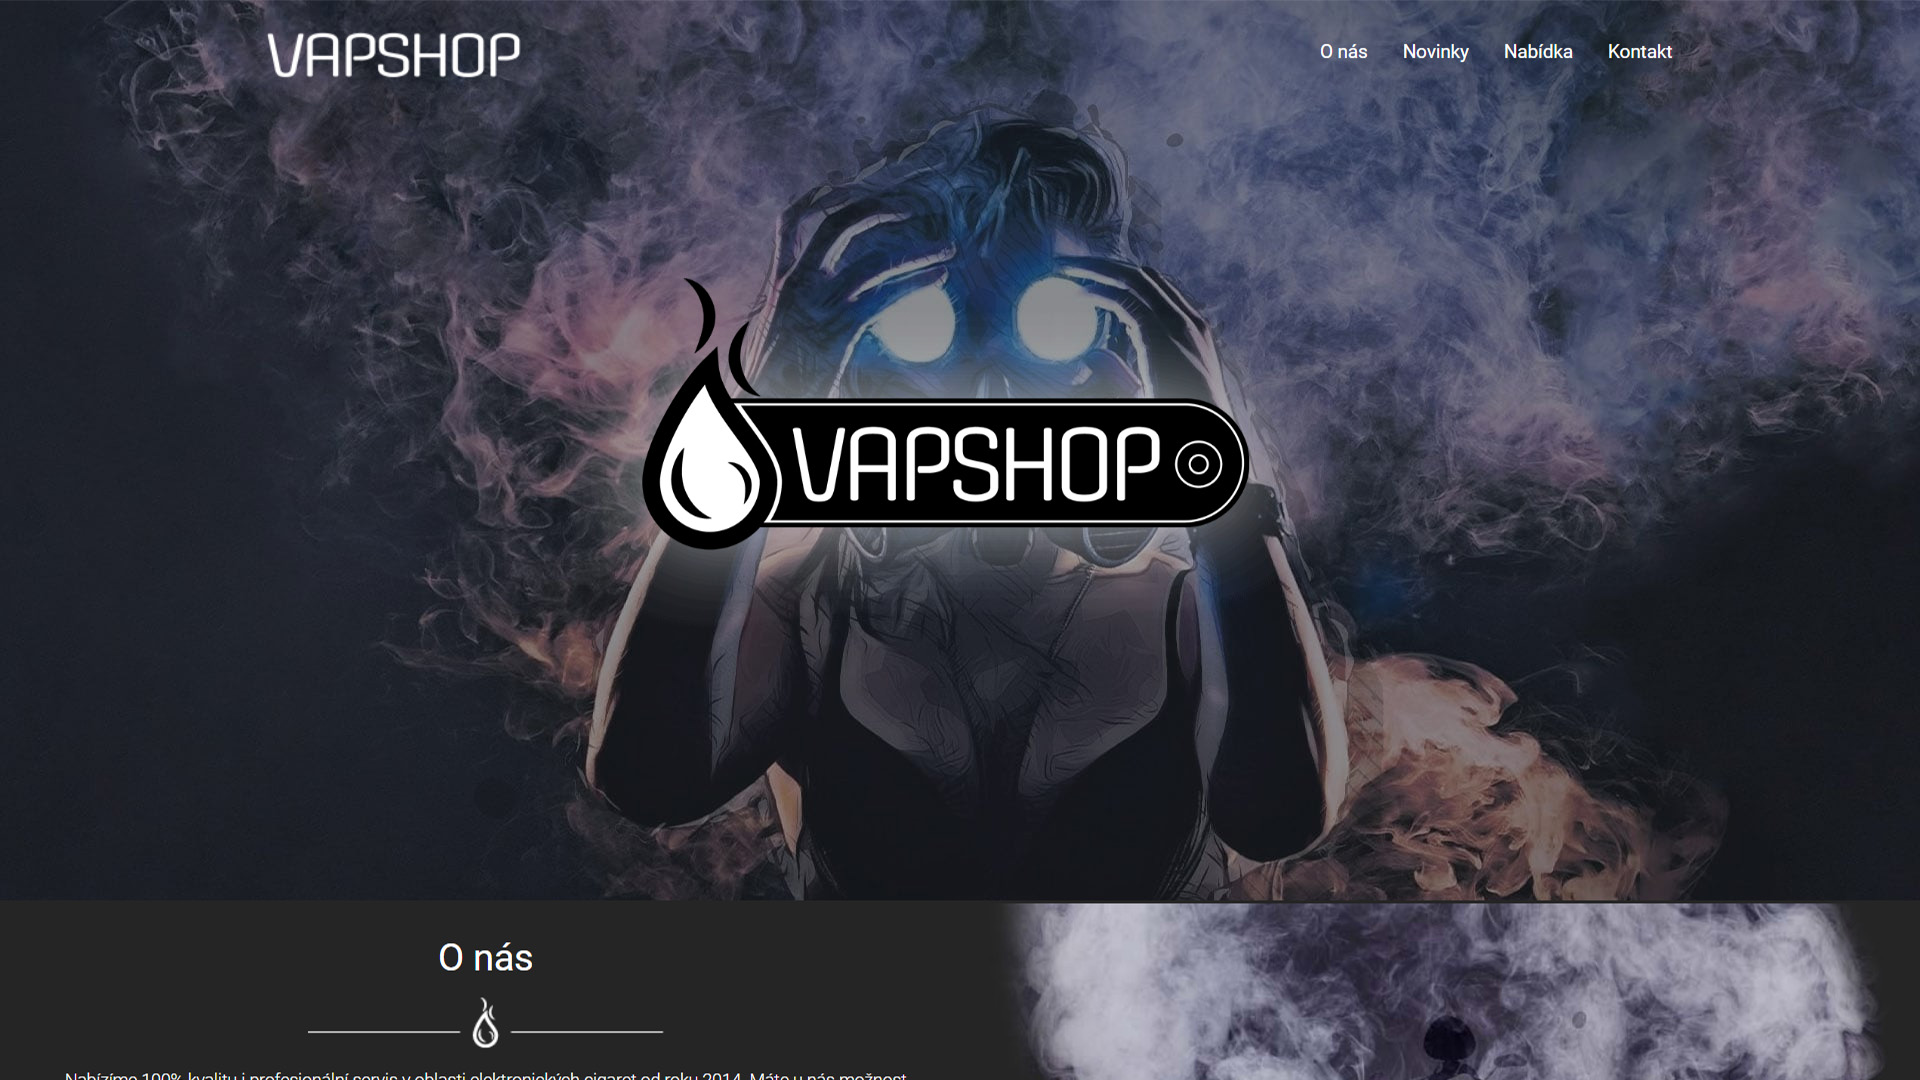 Vapshop - cover image